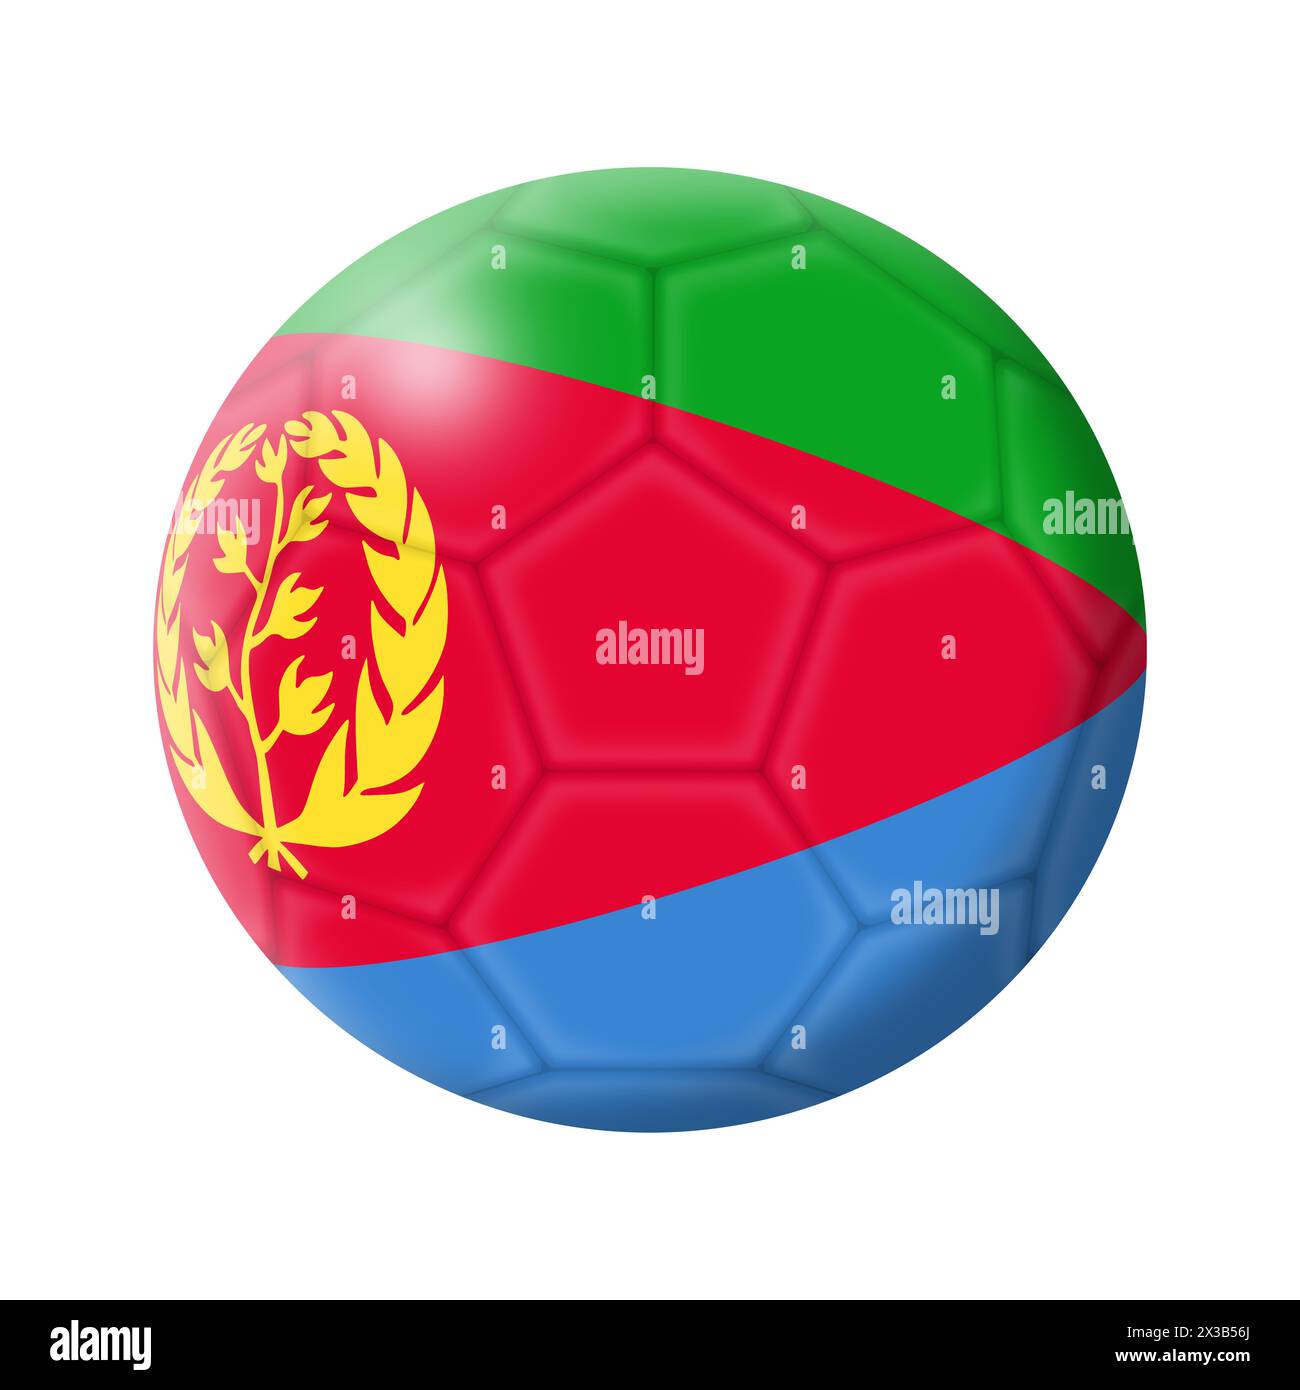 Eritrea soccer ball football with clipping path Stock Photo